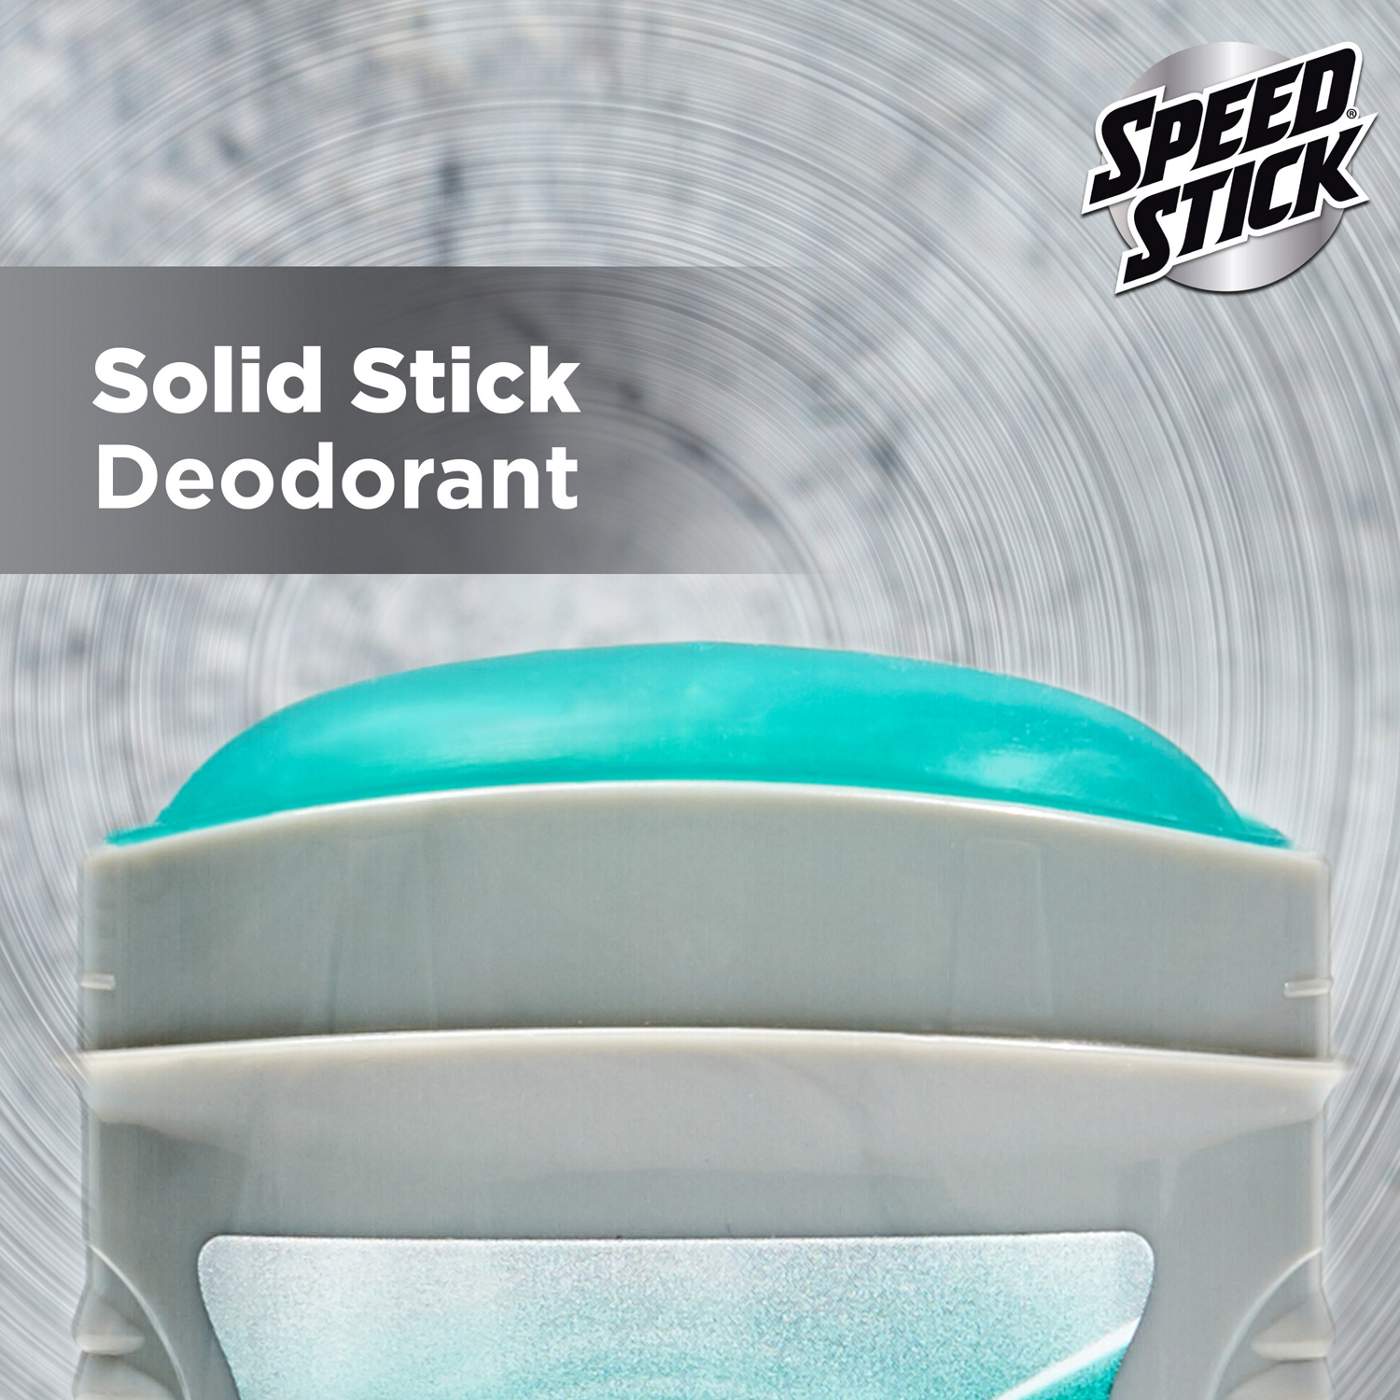 Speed Stick Deodorant - Regular; image 3 of 10